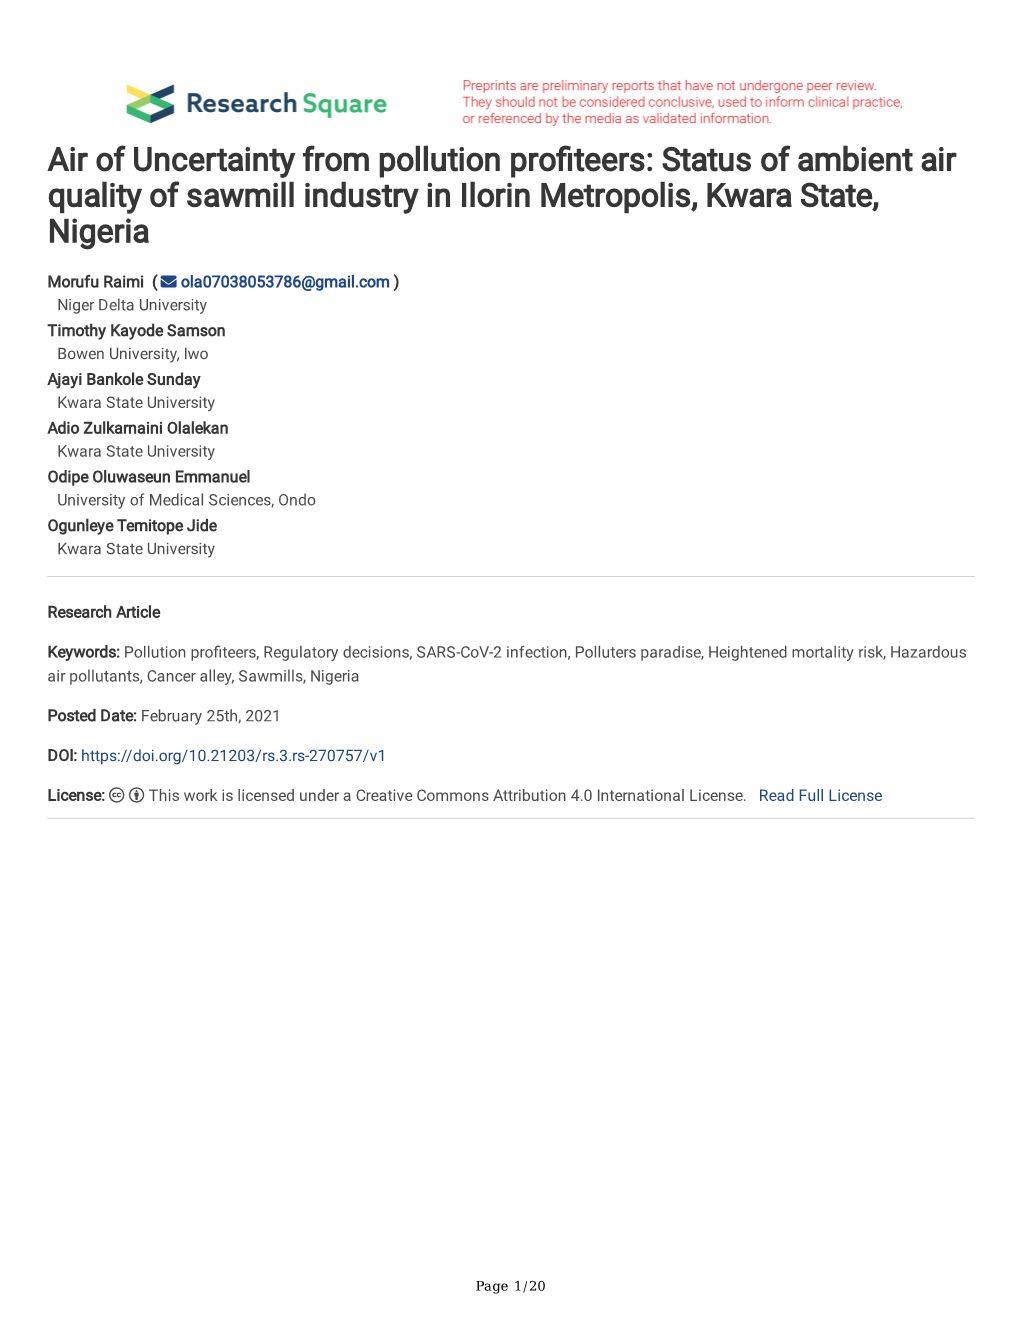 Status of Ambient Air Quality of Sawmill Industry in Ilorin Metropolis, Kwara State, Nigeria